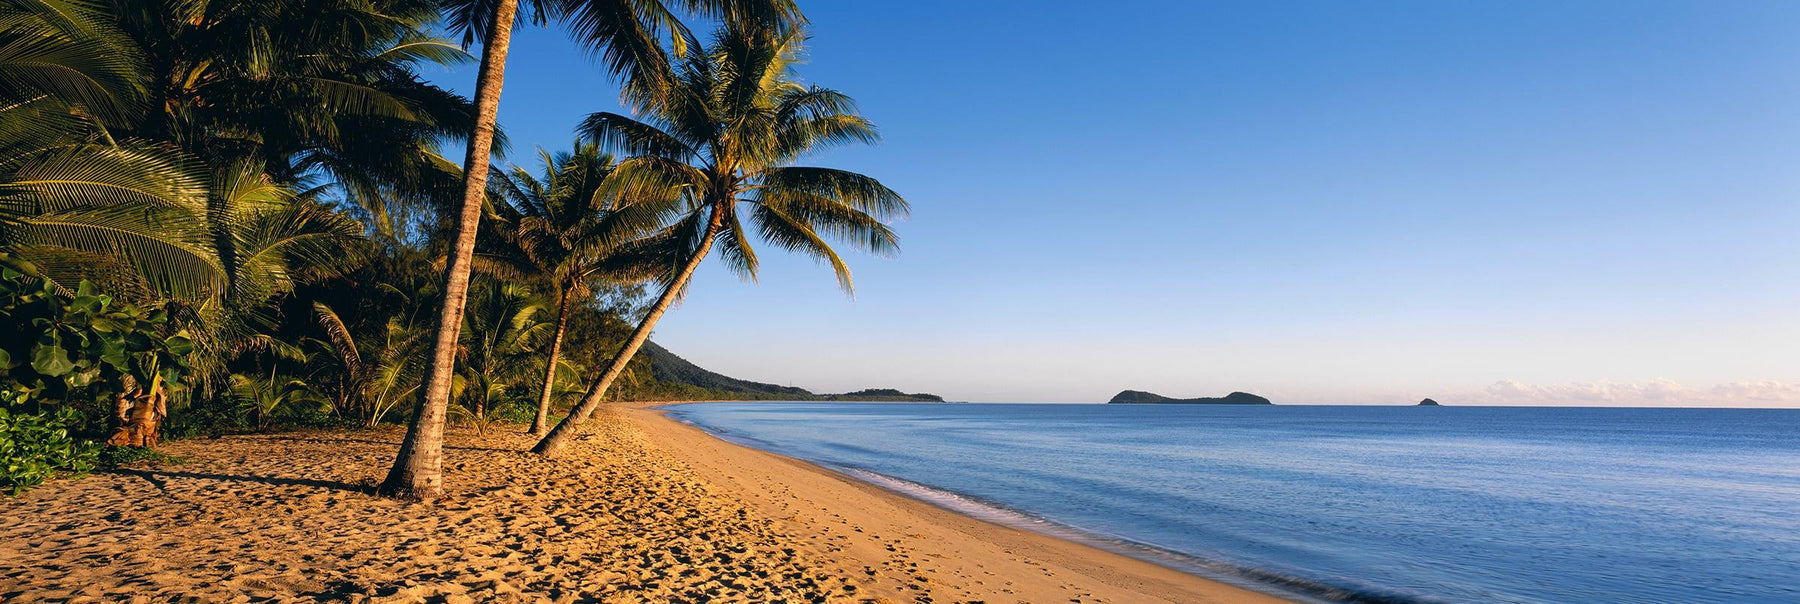 Palm tree lined beach on the coast of Queensland Australia